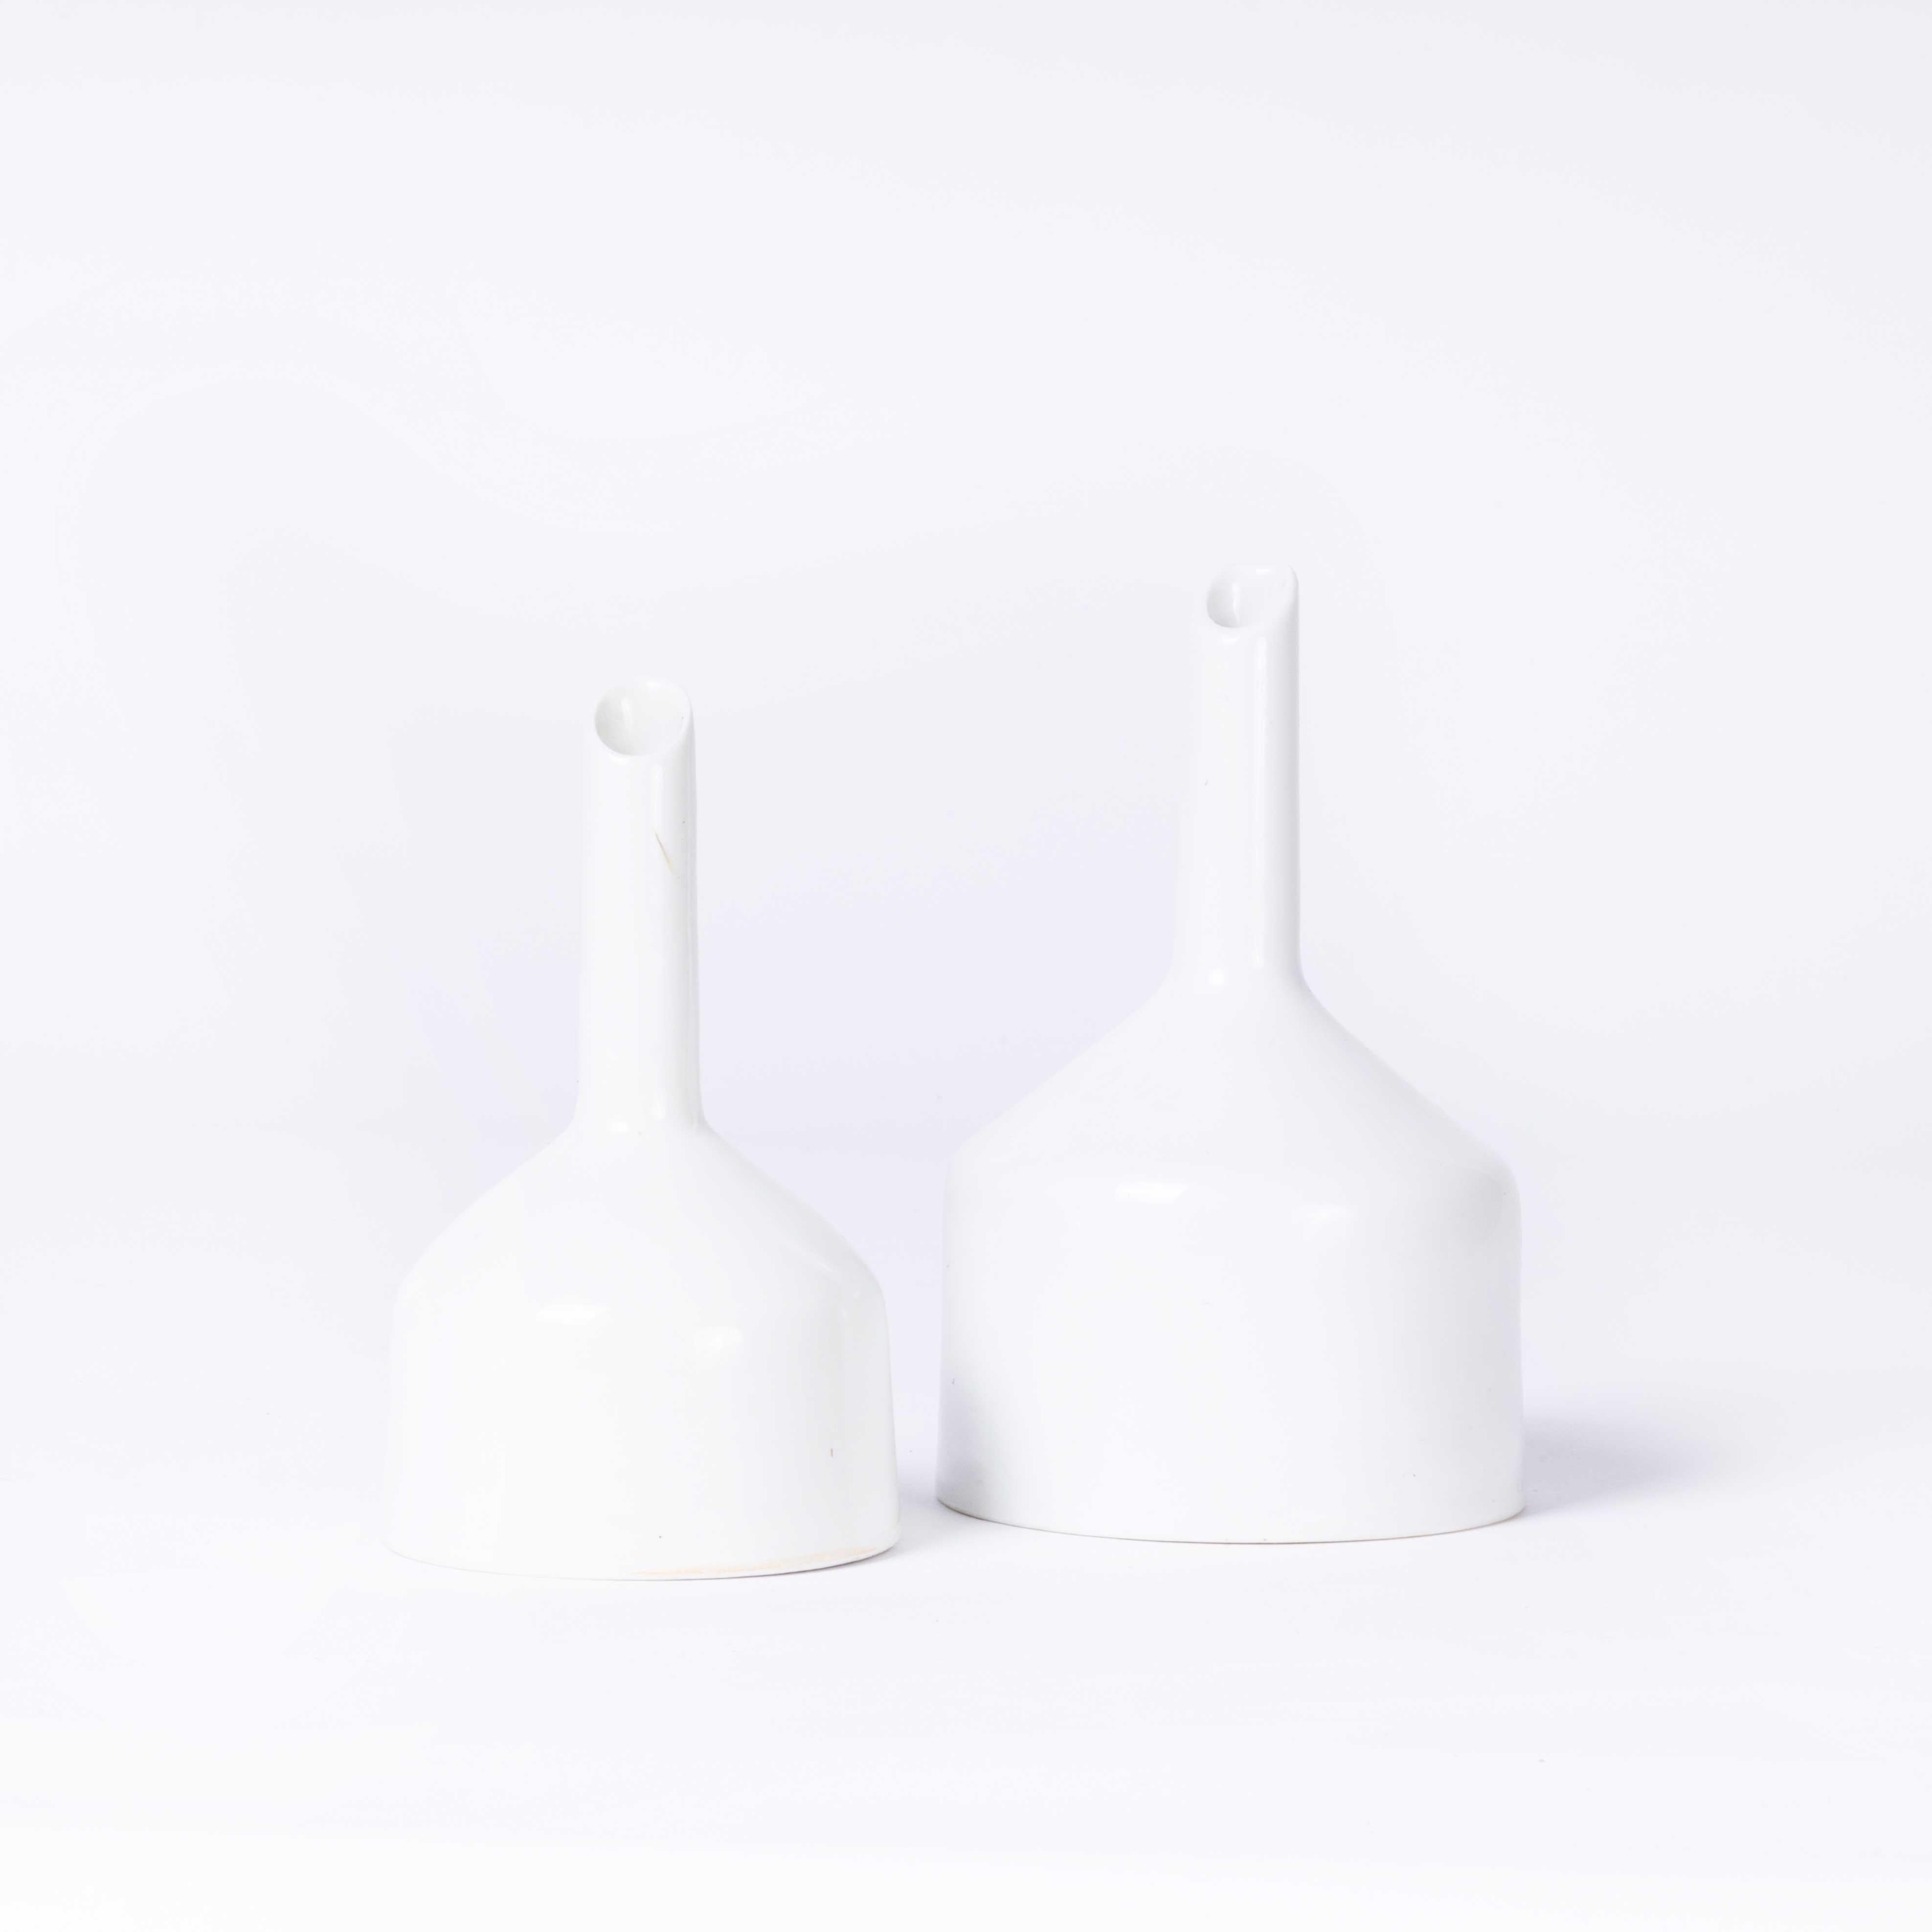 Czech New Old Stock Heavy Ceramic White Funnels, Pair For Sale